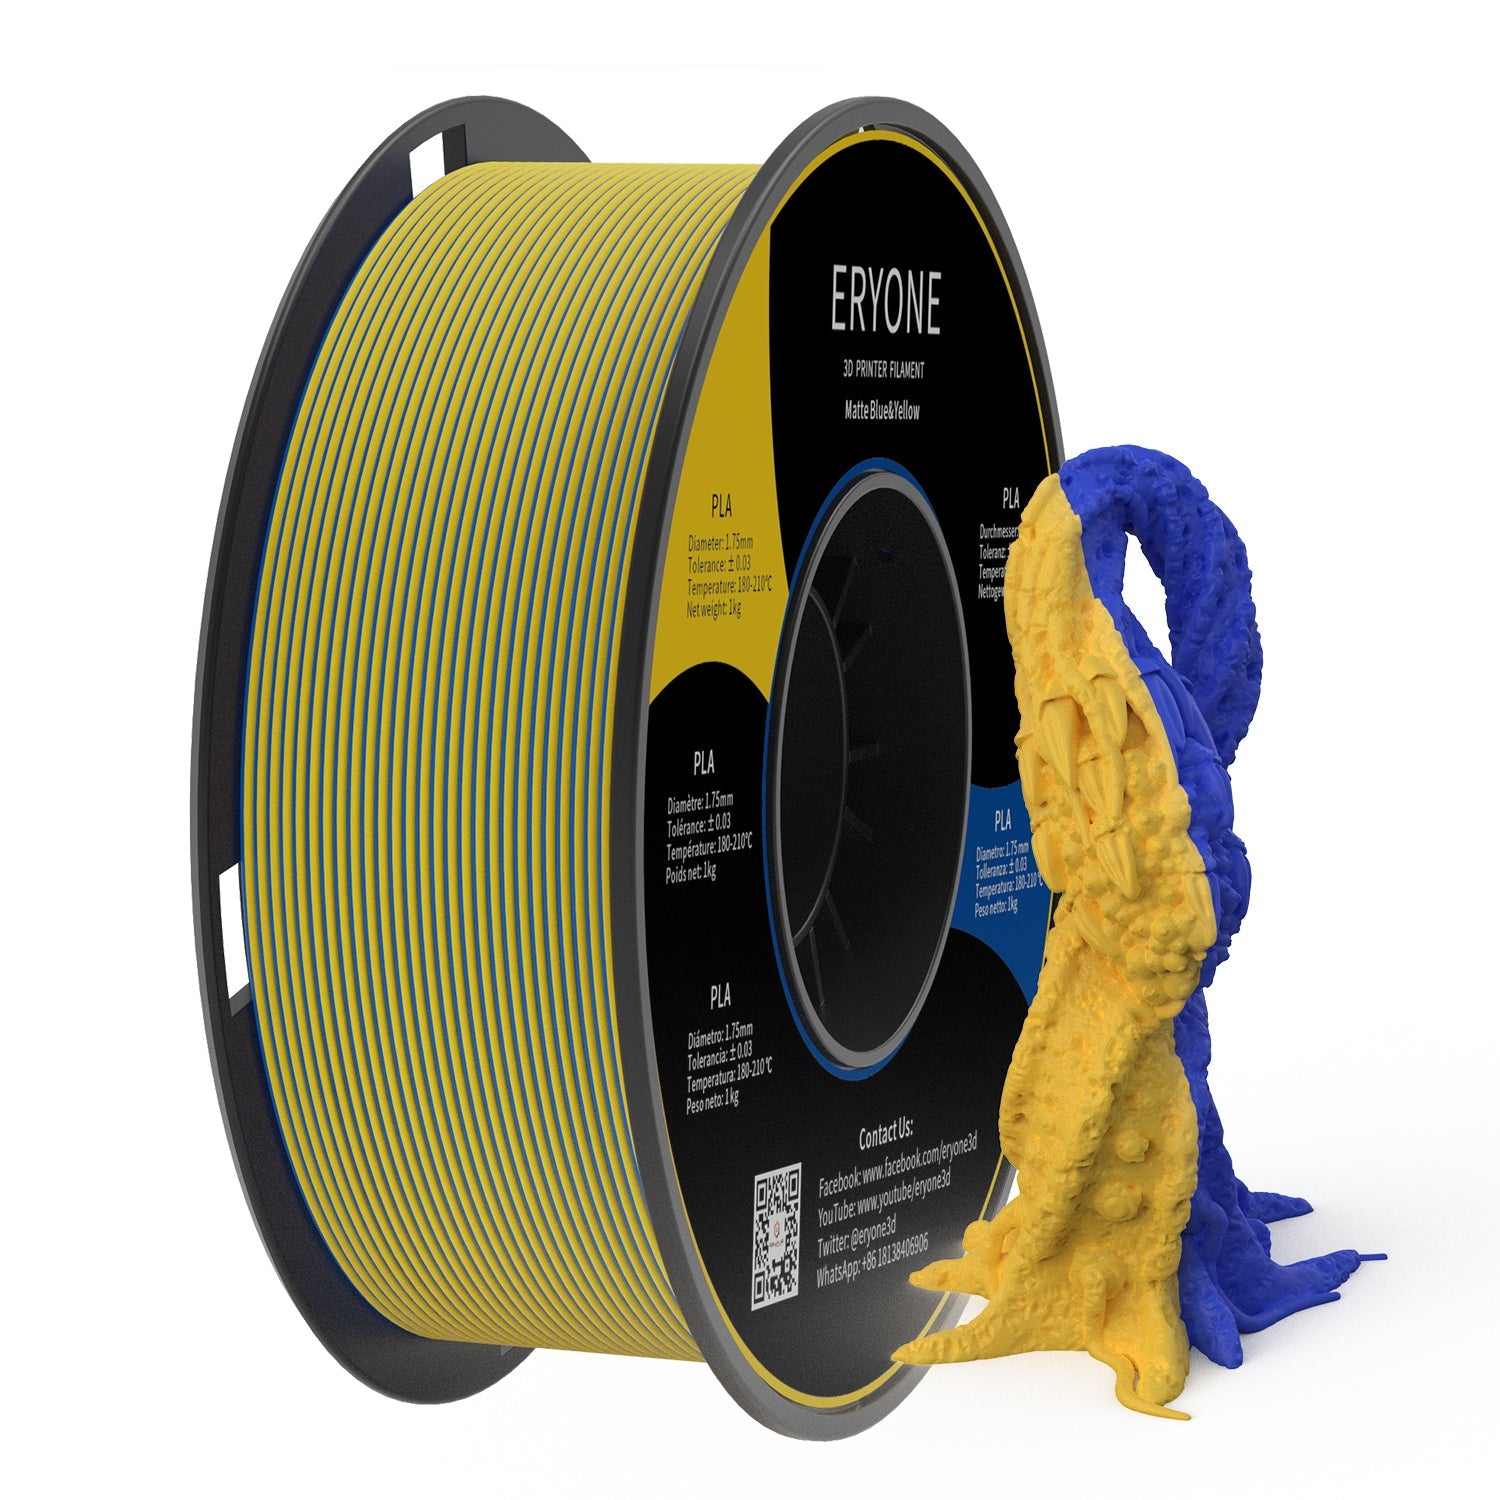 ERYONE 1kg (2.2LBS)/Spool 1.75mm Matte Dual-Color PLA Filament for 3D Printers,Accuracy +/- 0.03 mm